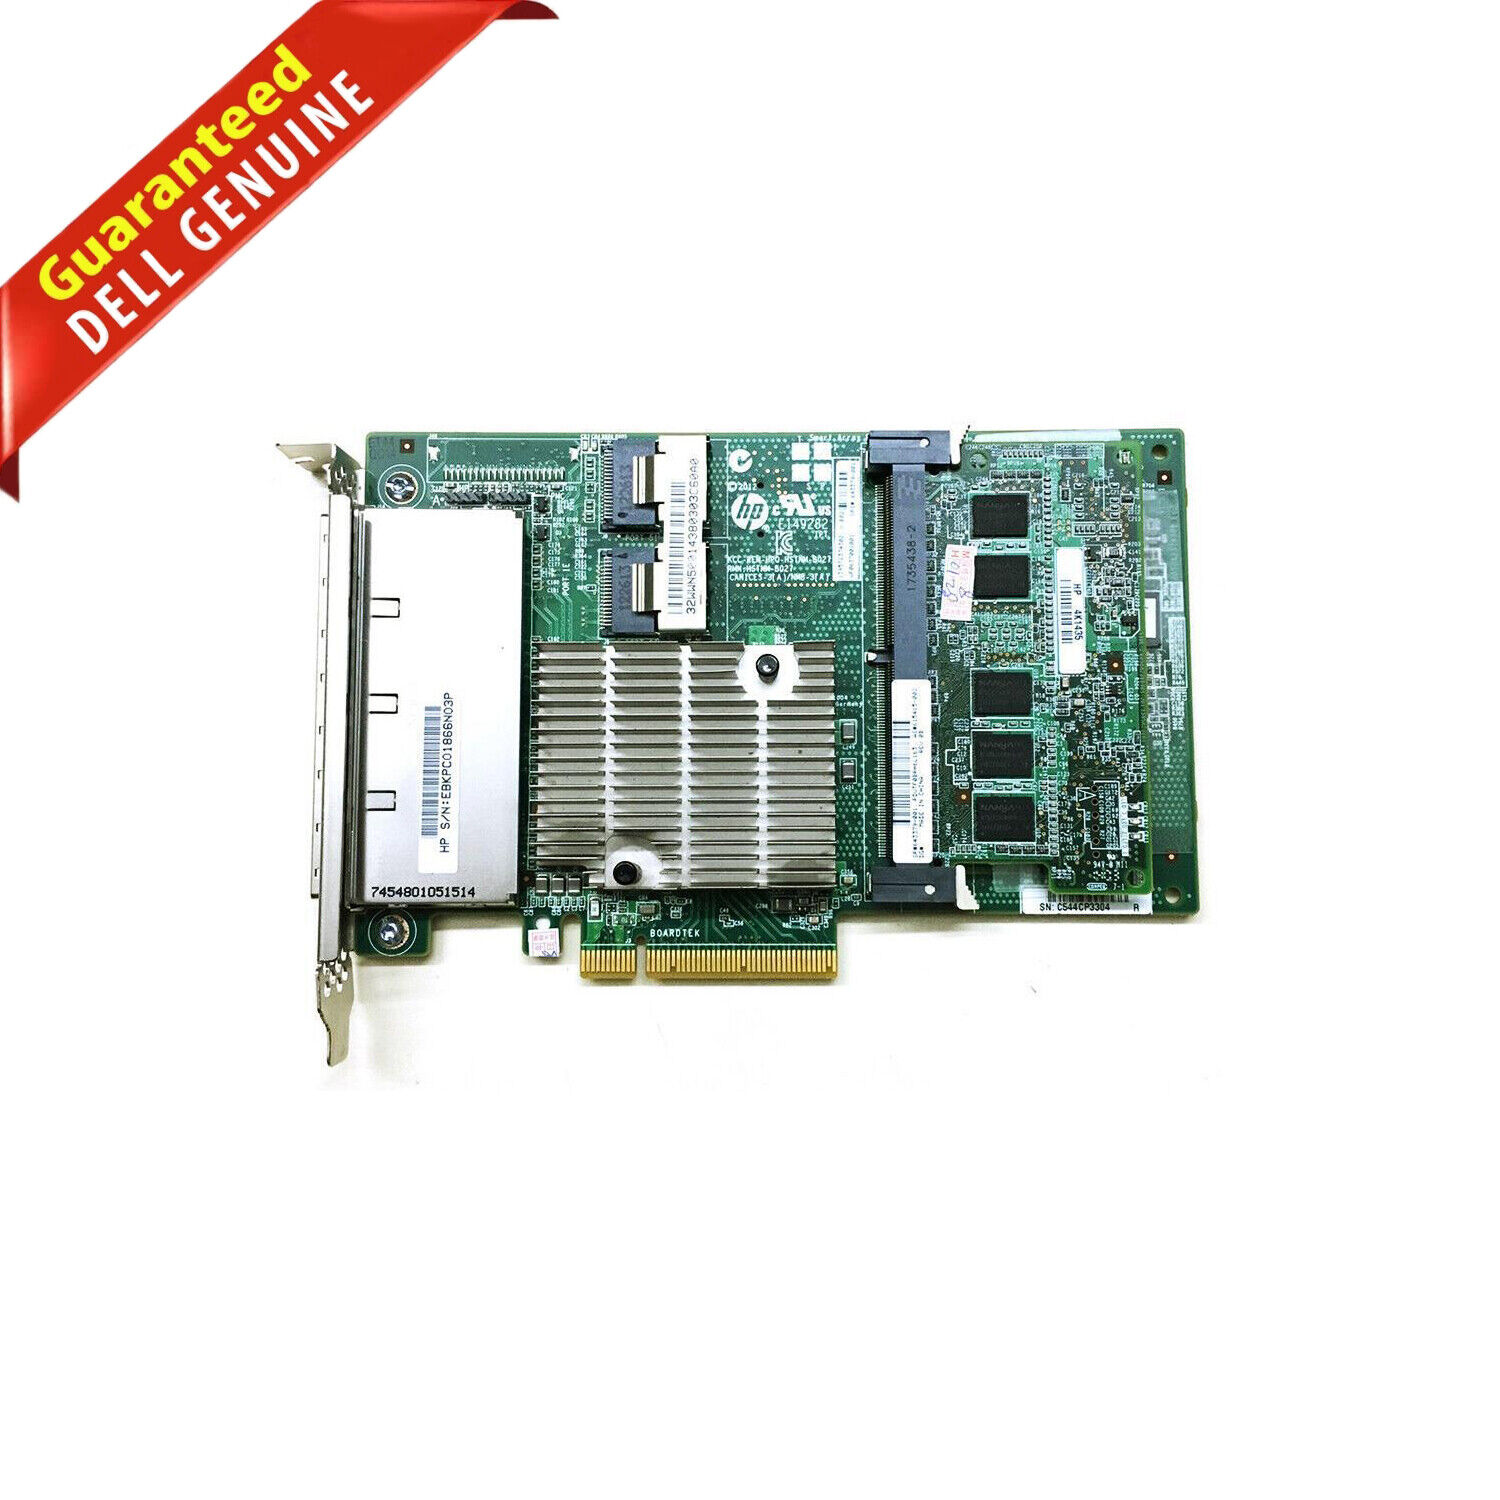 New Geniune HP Smart Array P822 PCI Express SAS Raid Controller Board 643379-001